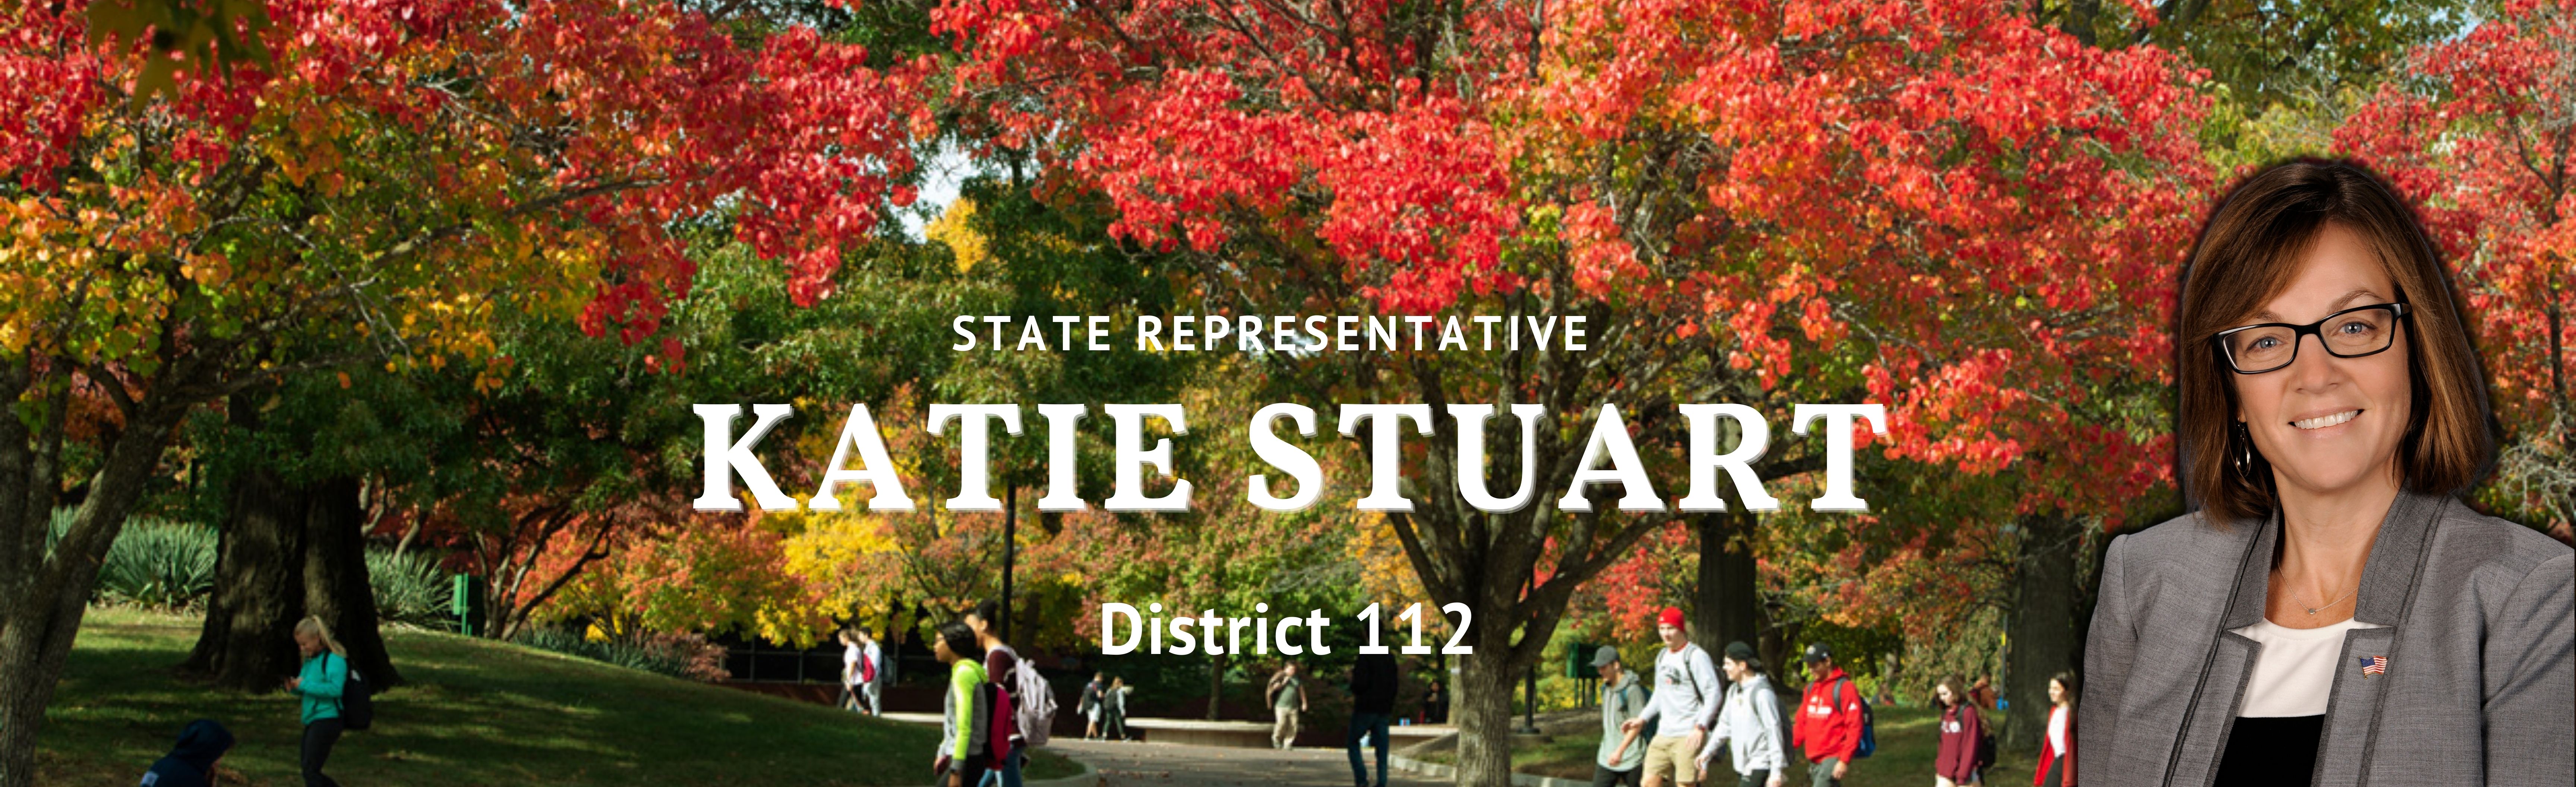 Illinois State Representative Katie Stuart